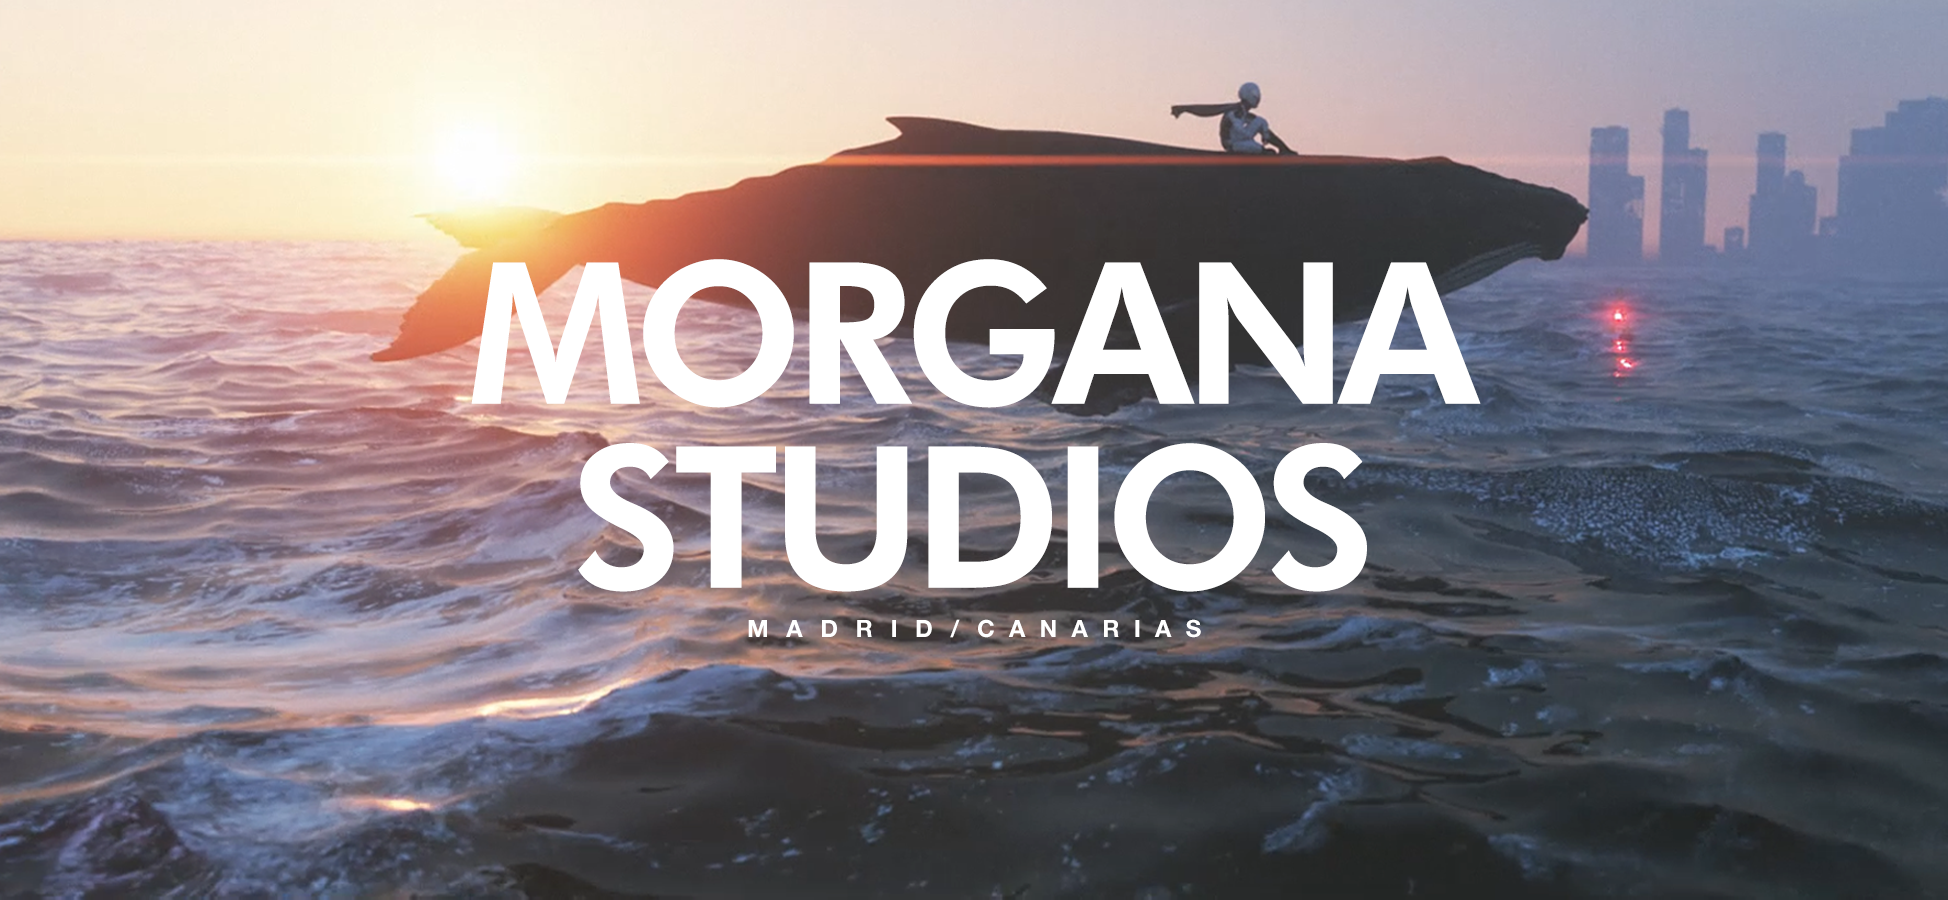 morgana studios vfx animacion 3d motion realidad aumentada virtual madrid canarias canary islands